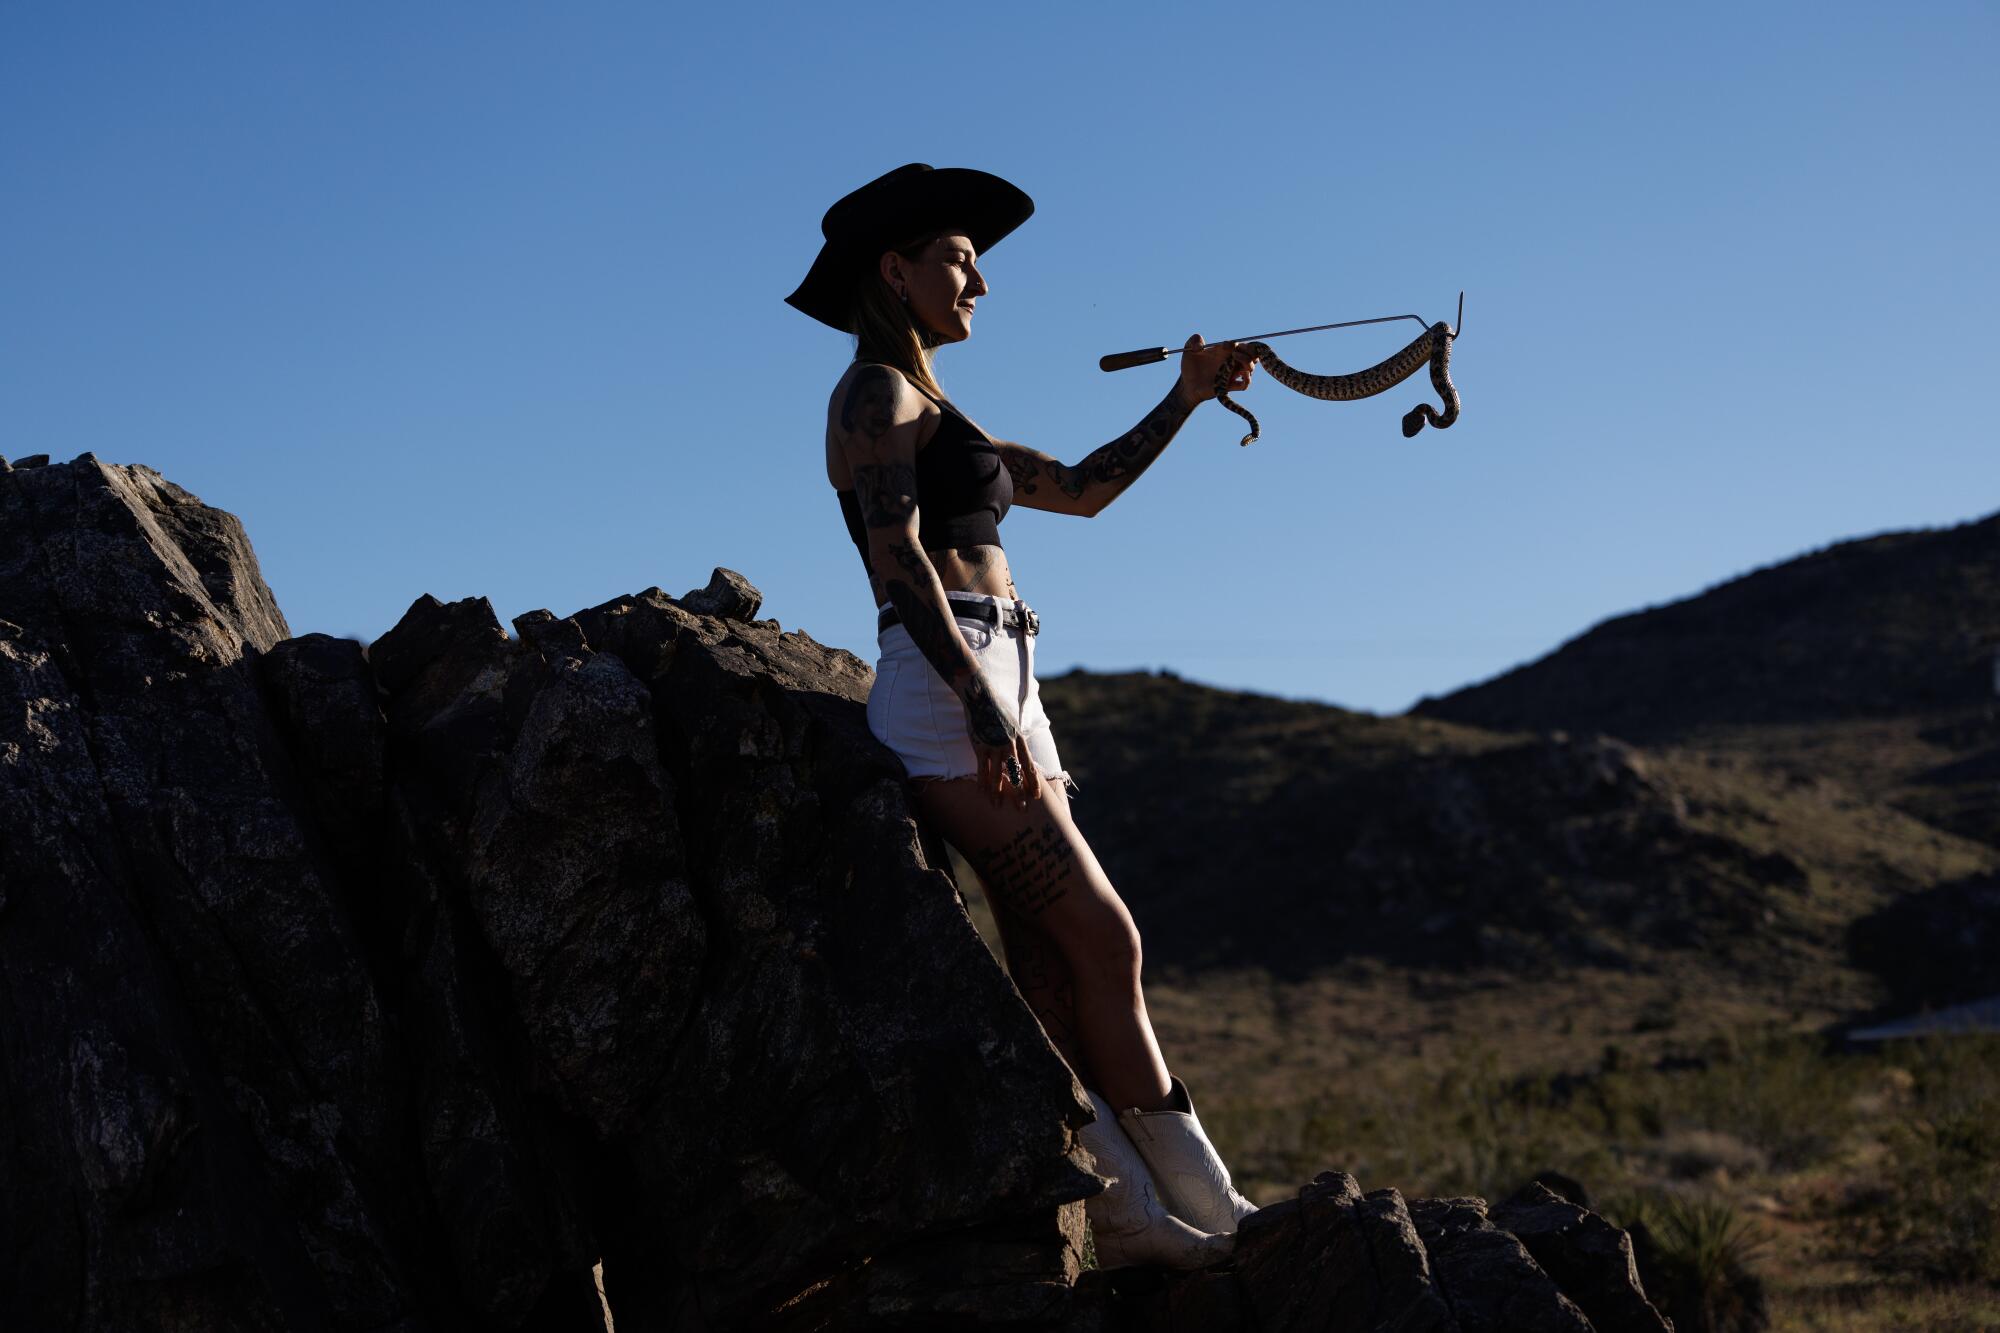 Rattlesnake wrangler Danielle Wall, in a cowboy hat, holds a Southwestern speckled rattlesnake